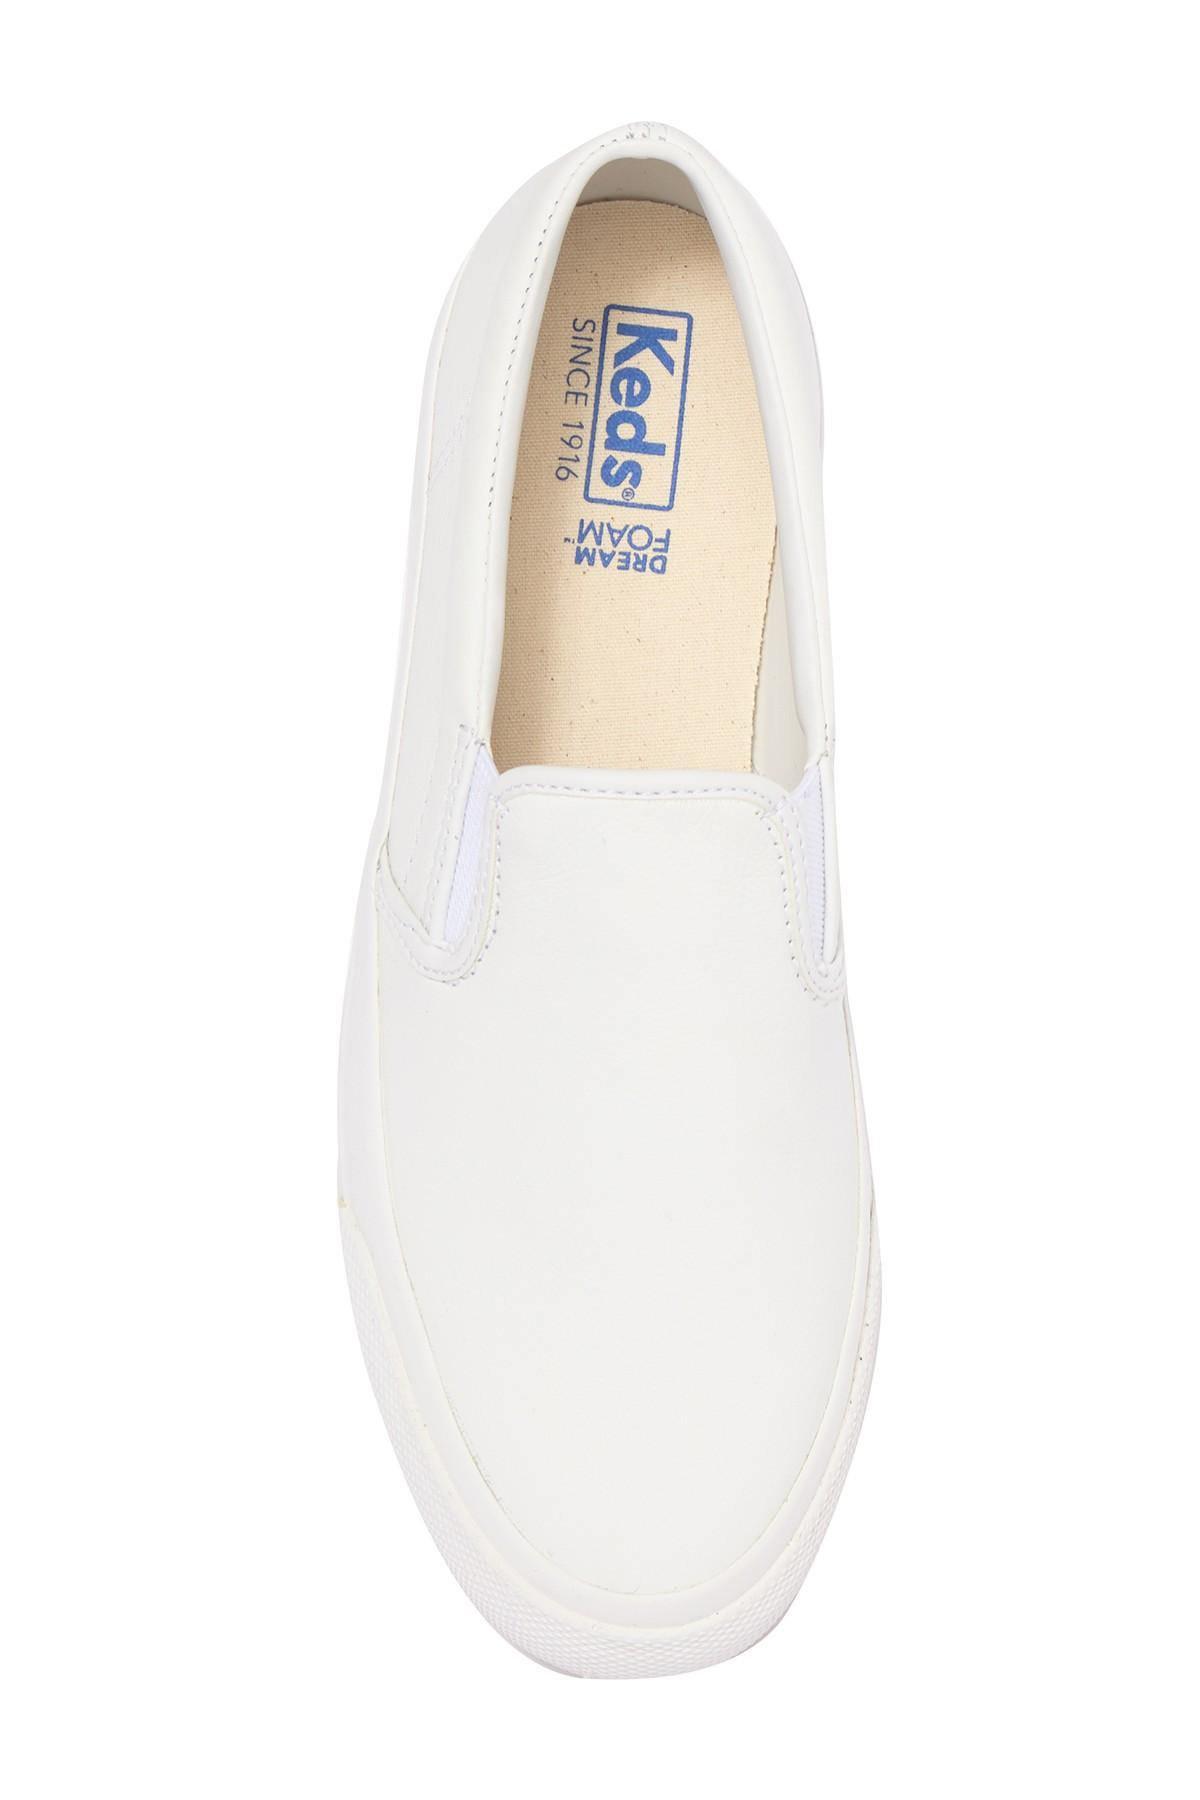 Keds Anchor Leather Slip-on Sneaker in White - Lyst